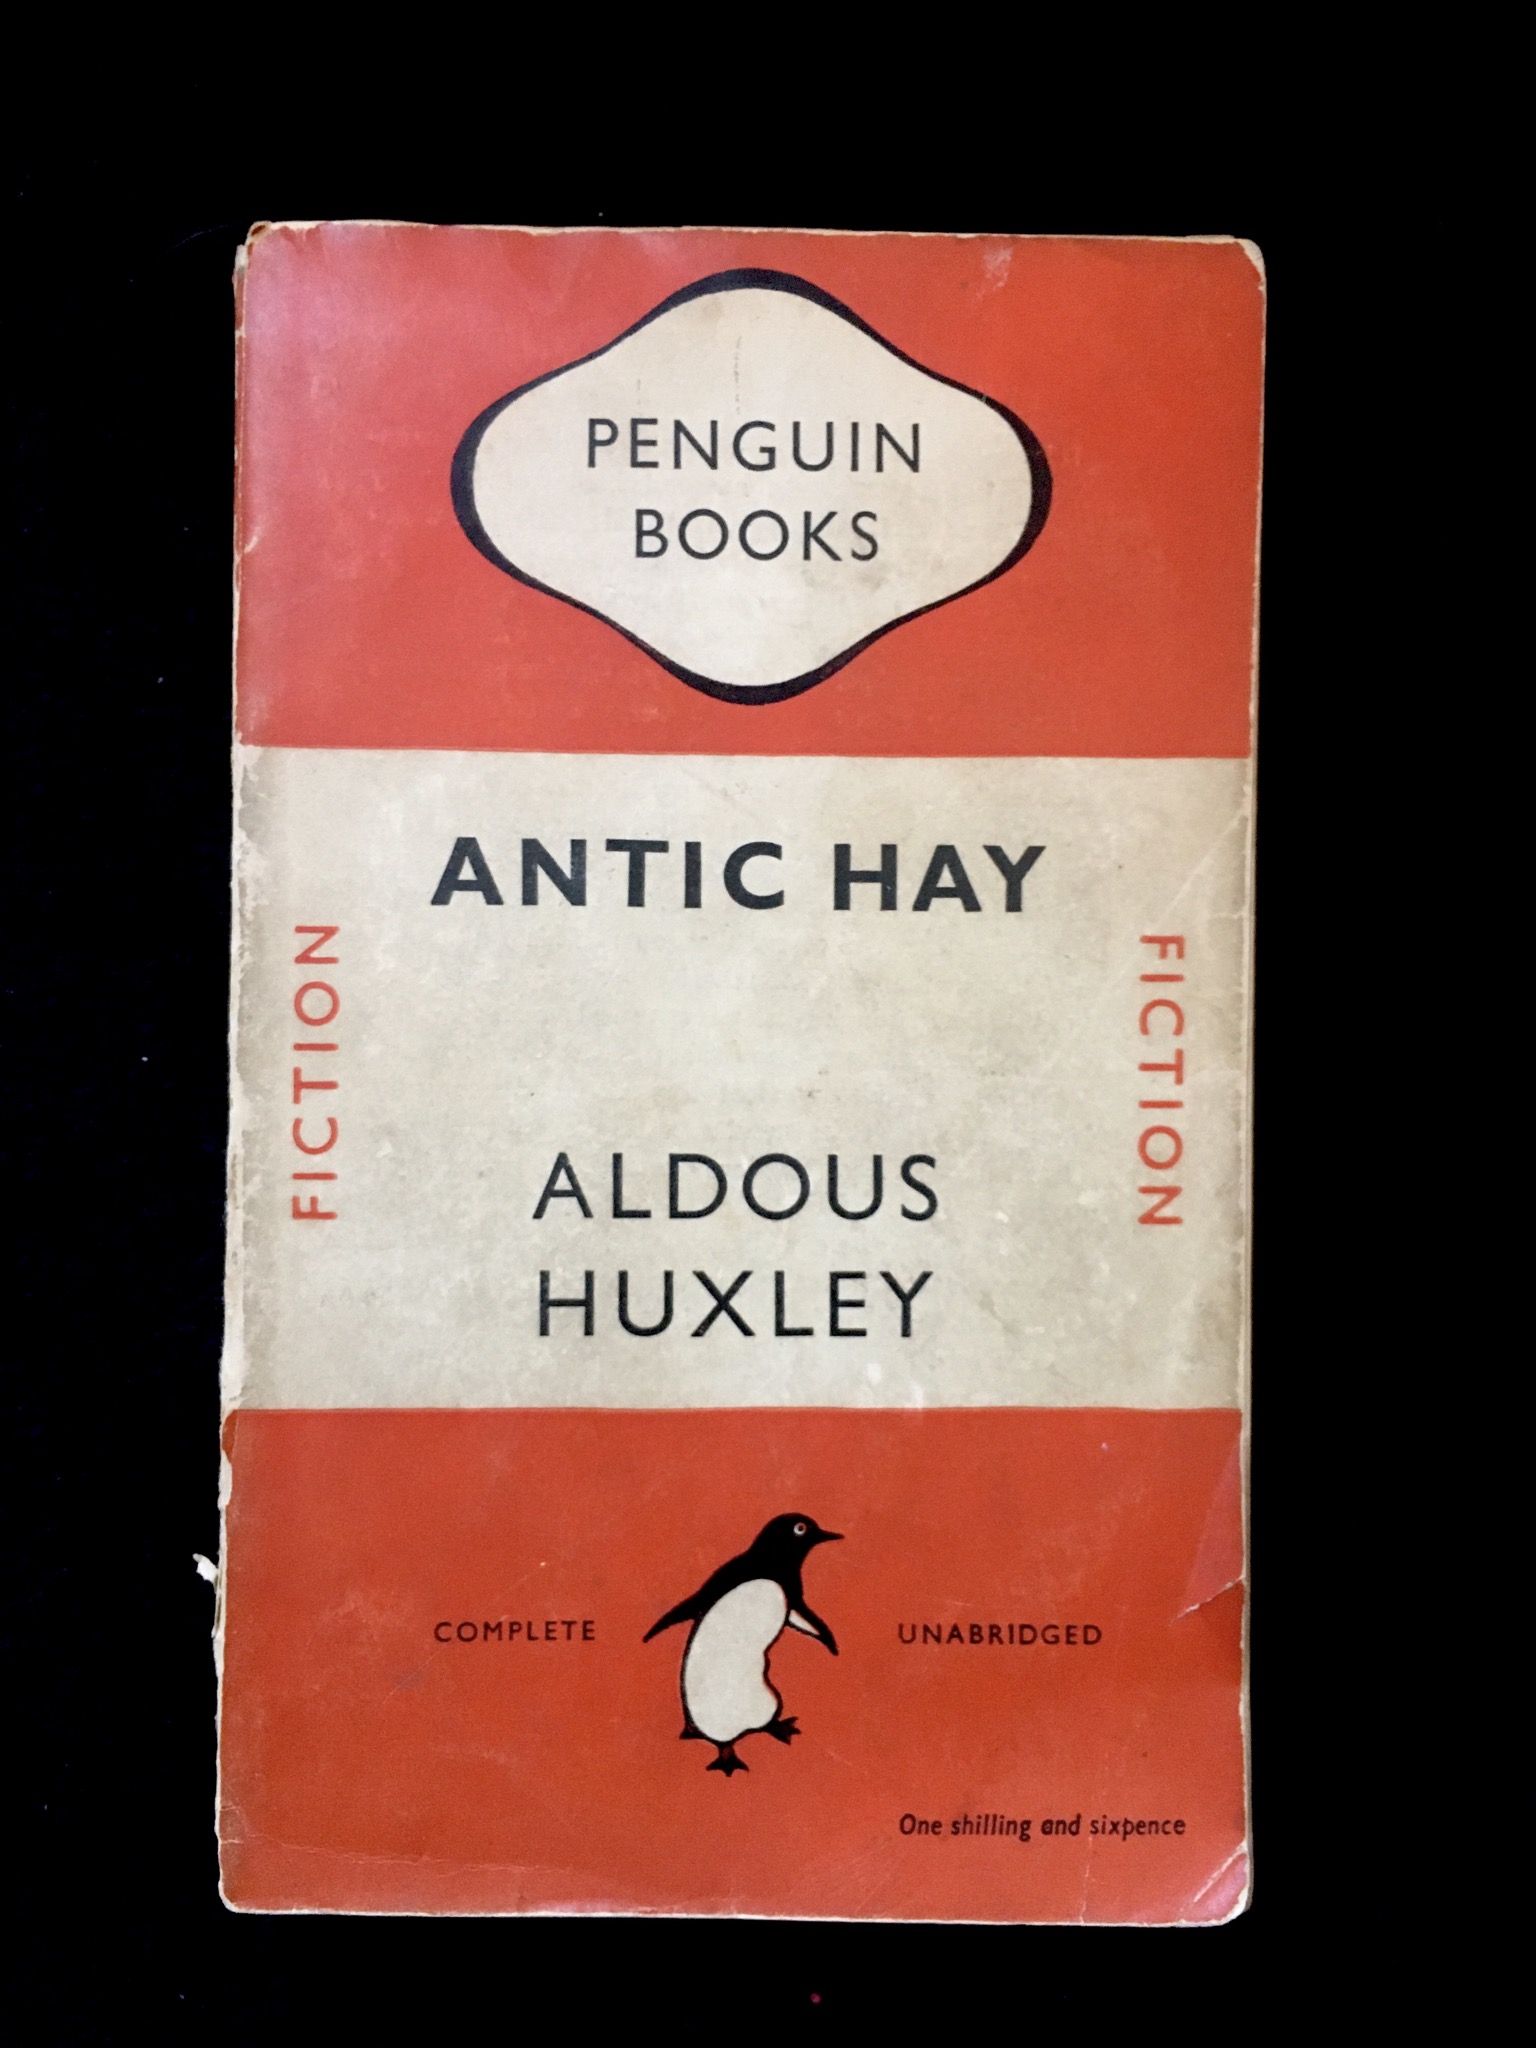 Antic Hay by Aldous Huxley